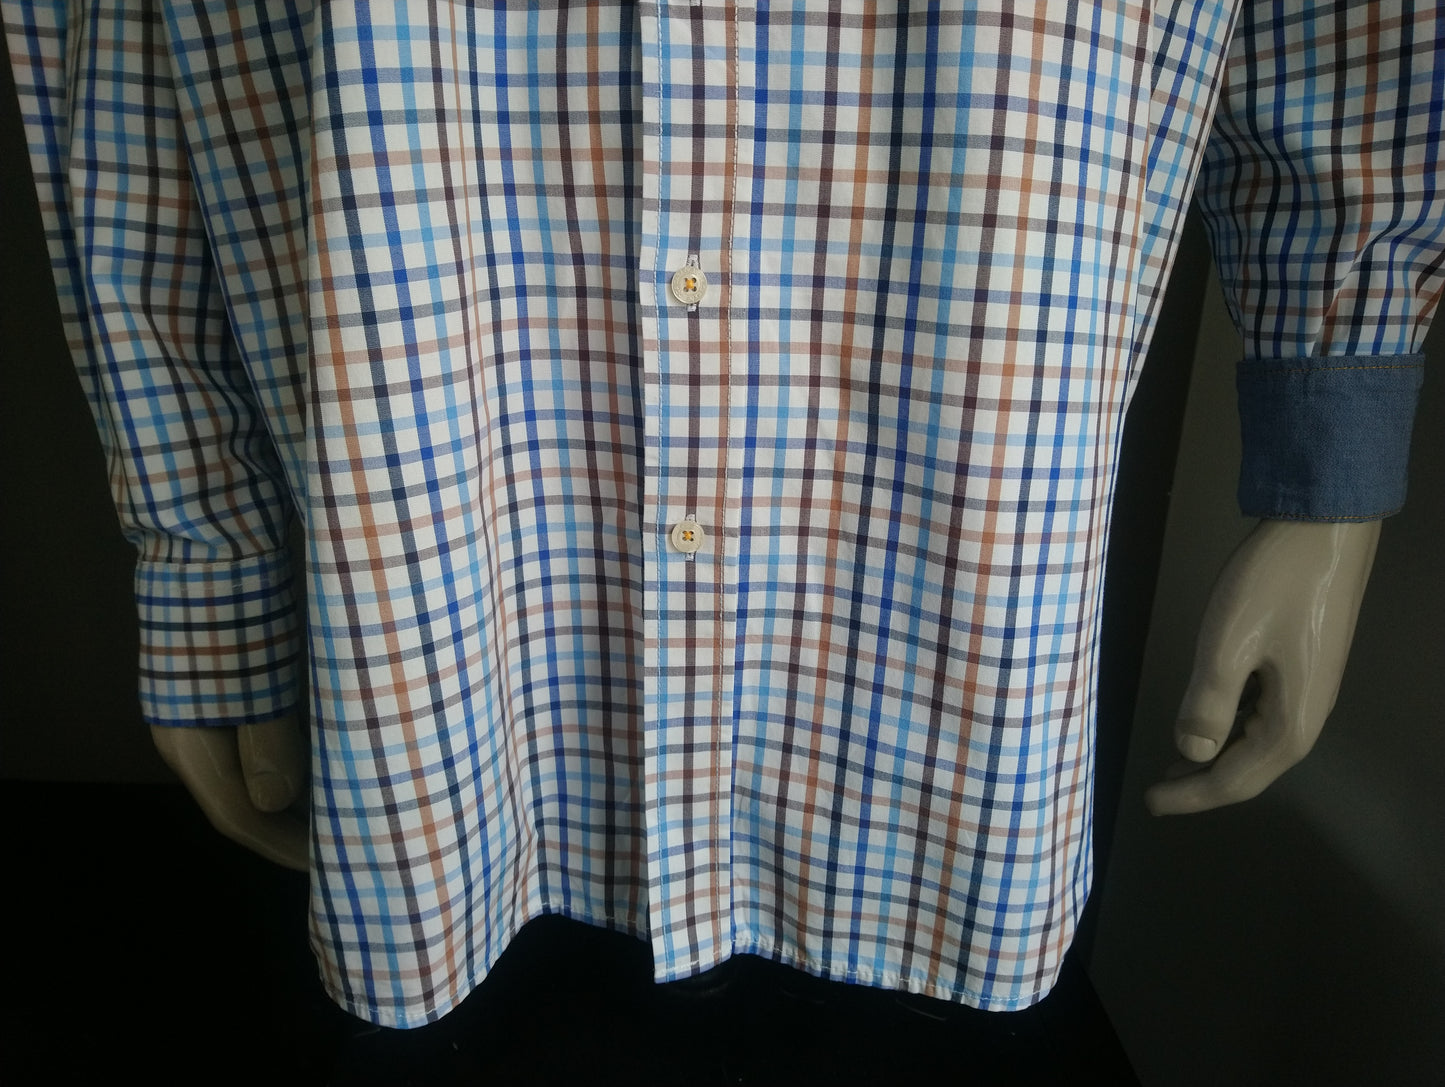 Casa Moda shirt. Blue white brown blocked. Size 3XL / XXXL.